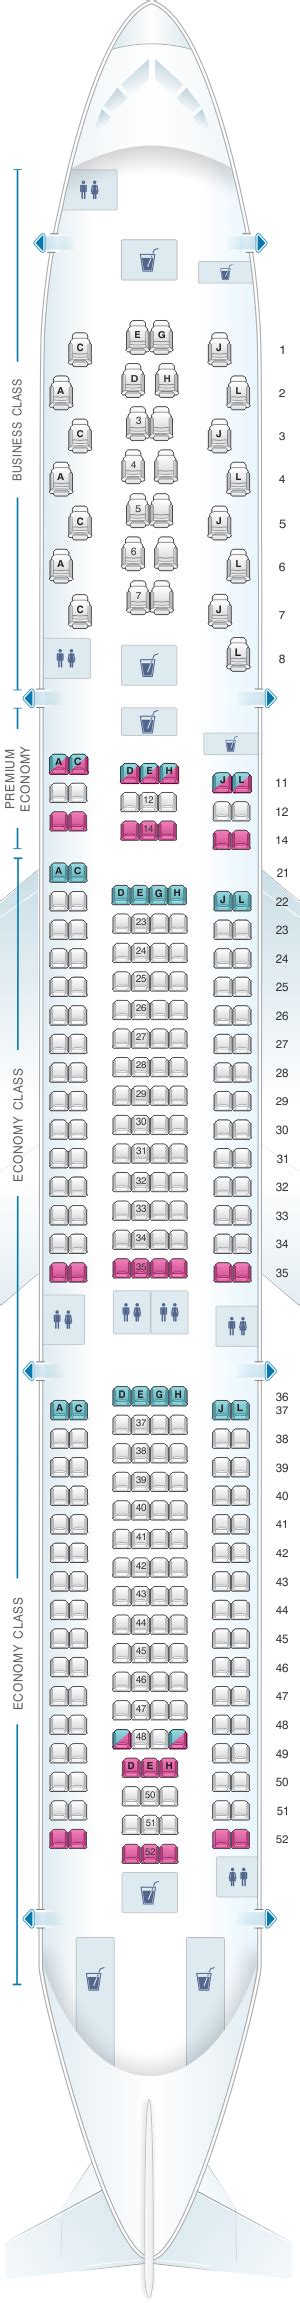 Iberia A330 Seat Map